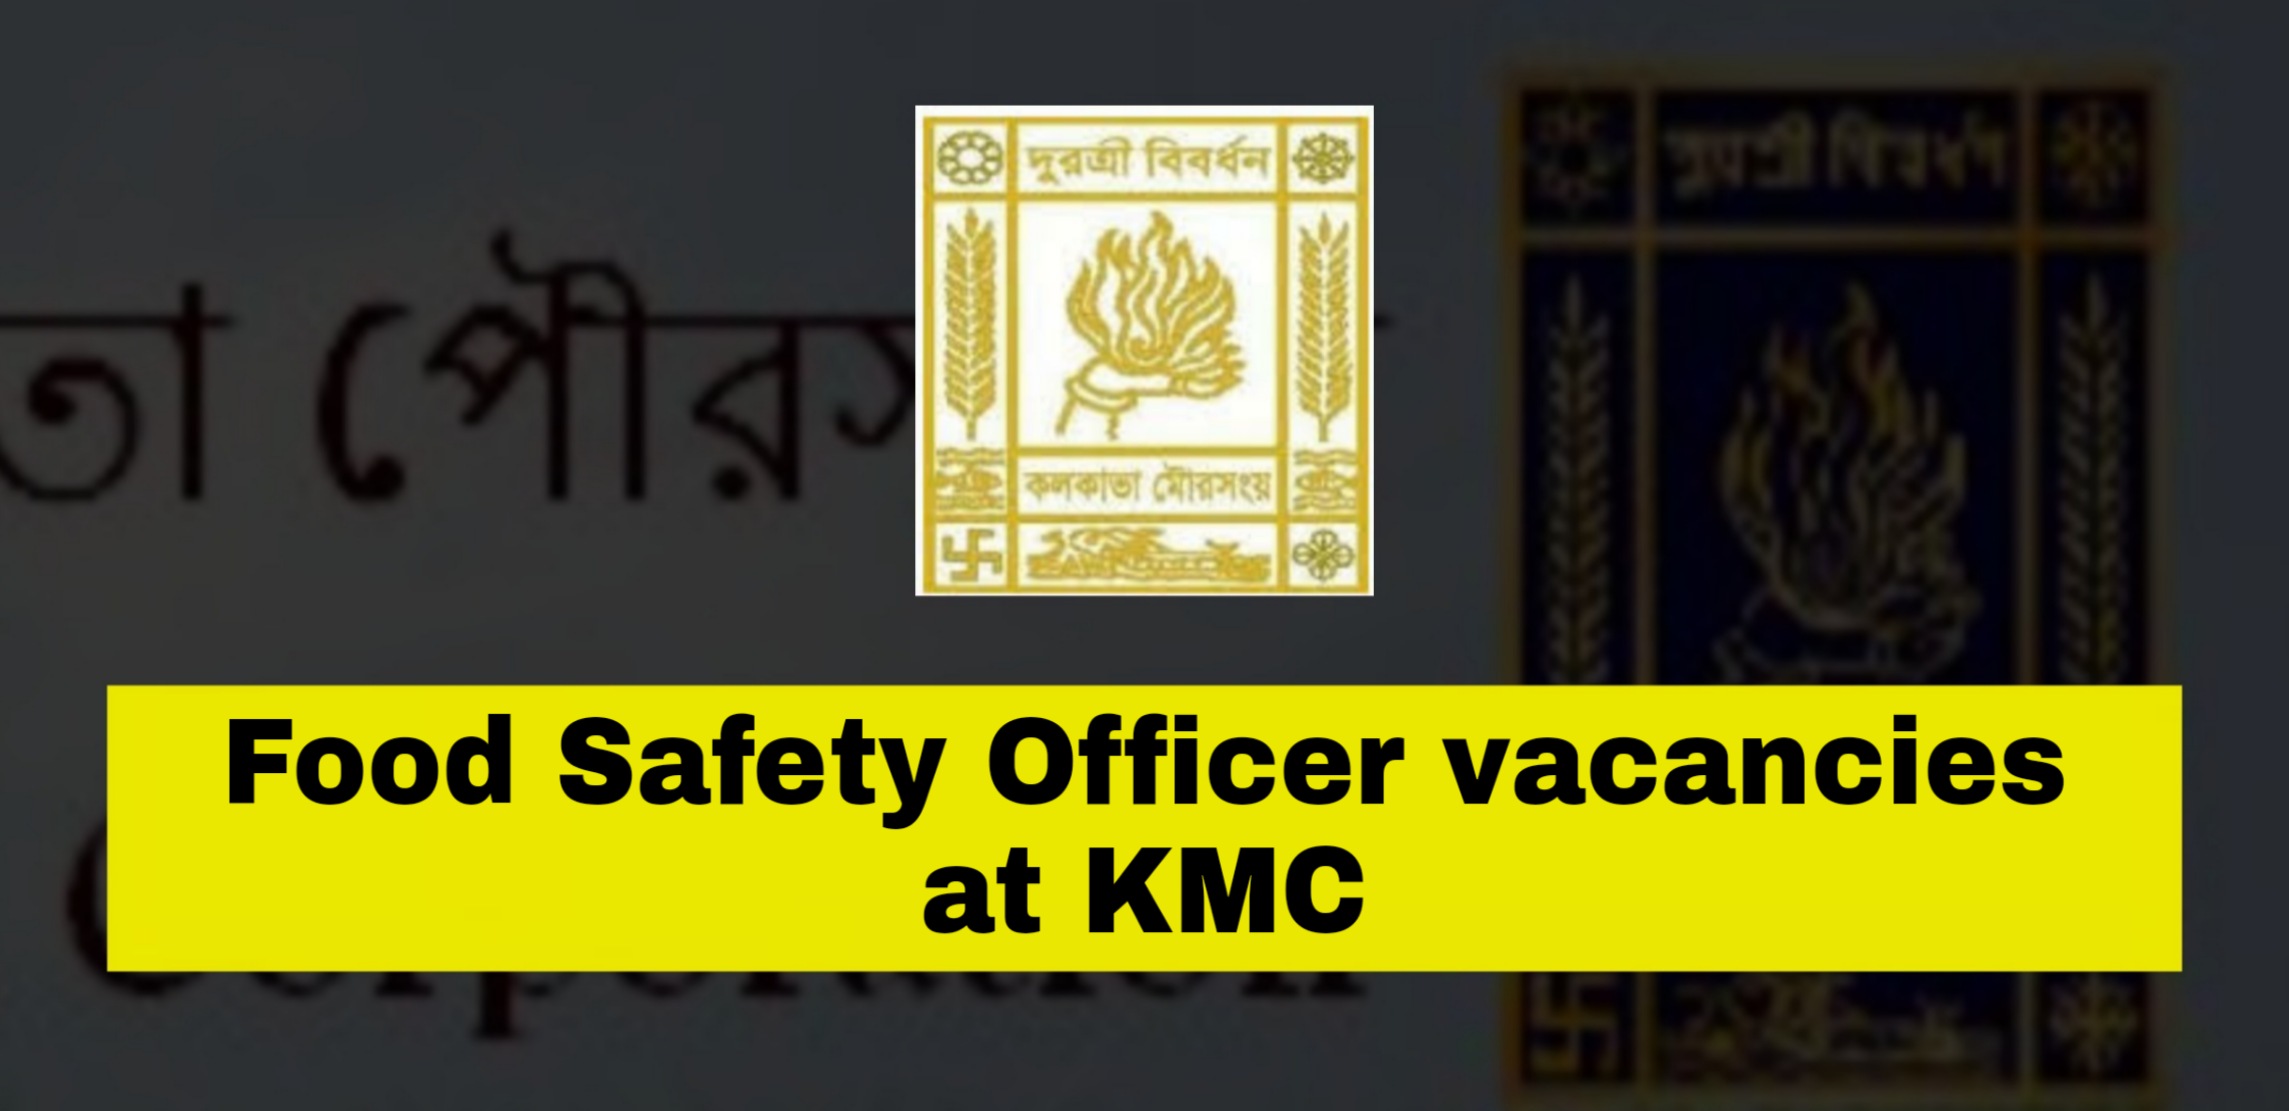 Food Safety Officer vacancies - Kolkata Municipal Corporation - MSCWB Recruitment 2020